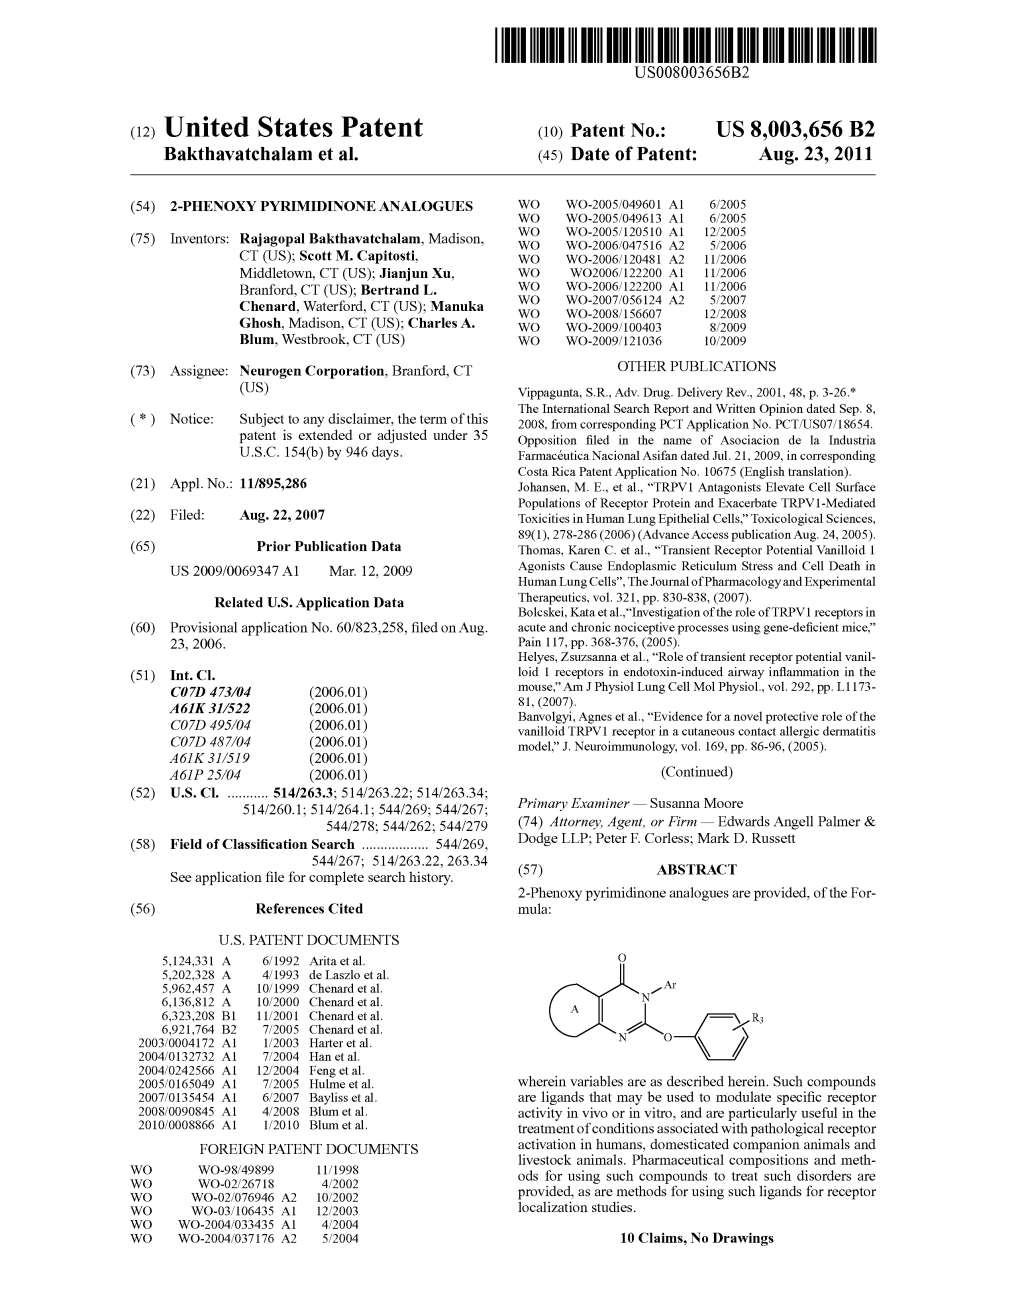 (12) United States Patent (10) Patent No.: US 8,003,656 B2 Bakthavatchalam Et Al